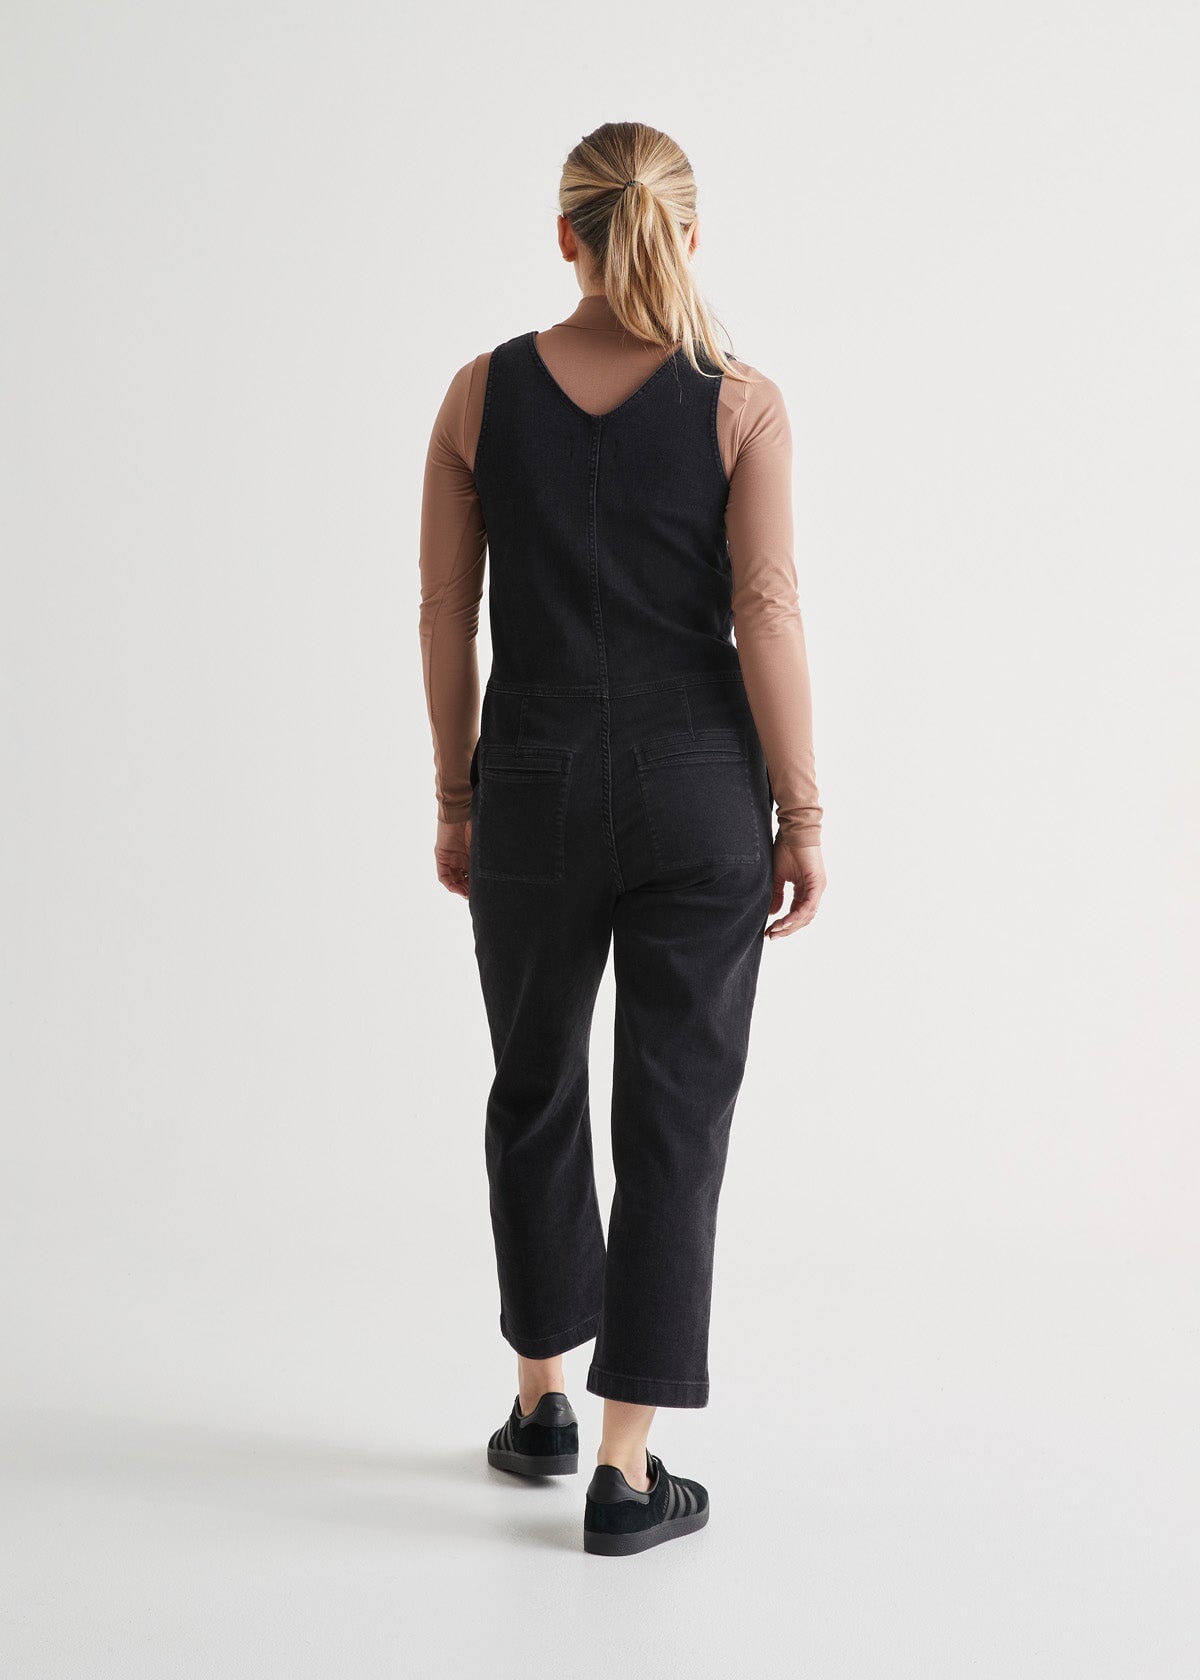 Shape Black Stretch Front Sleeveless Jumpsuit